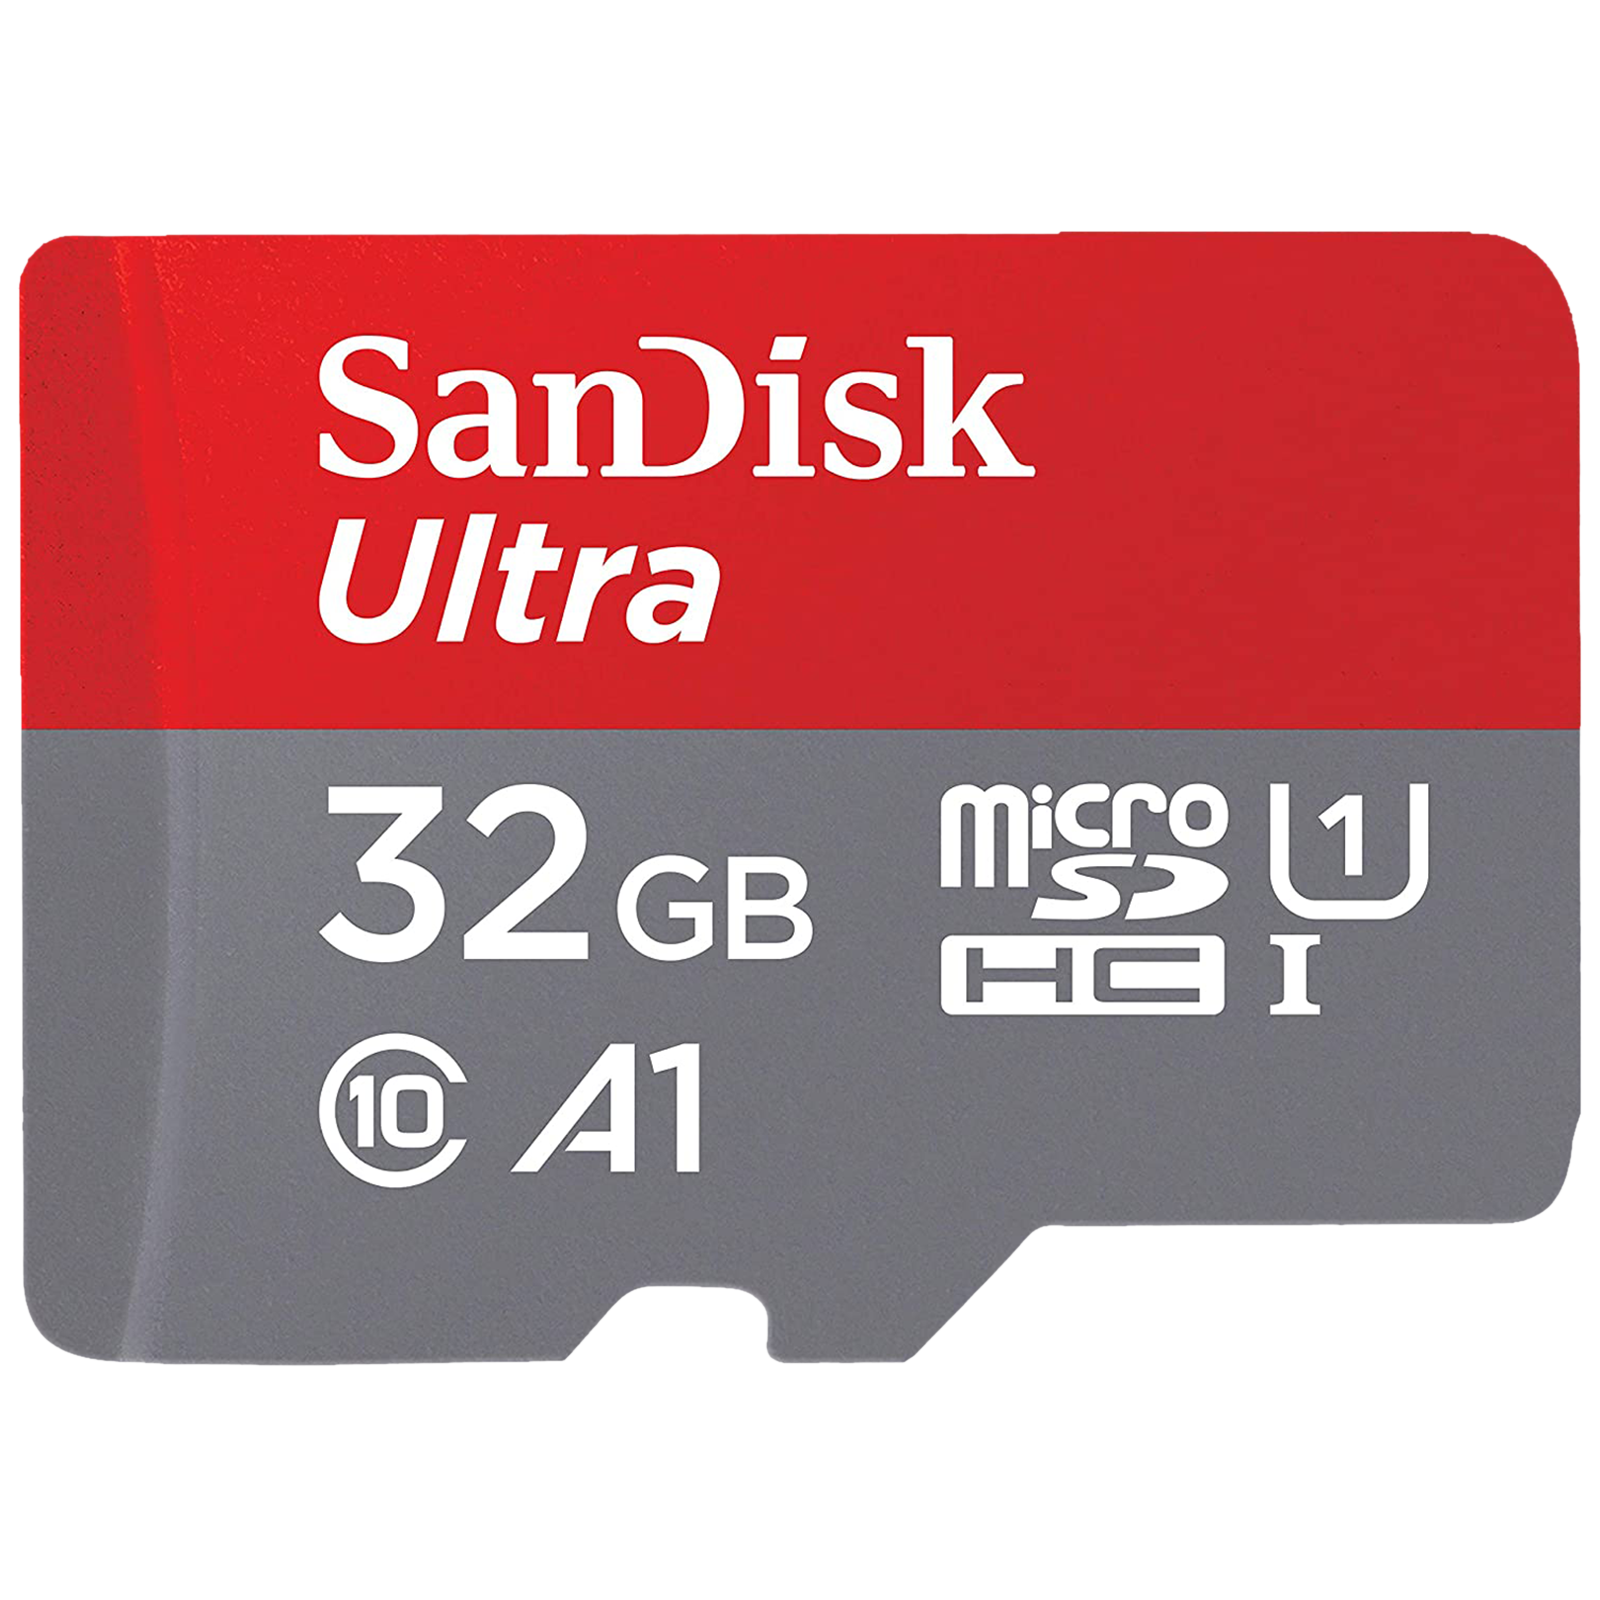 SanDisk Ultra MicroSDHC 32GB Class 10 100MB/s Memory Card